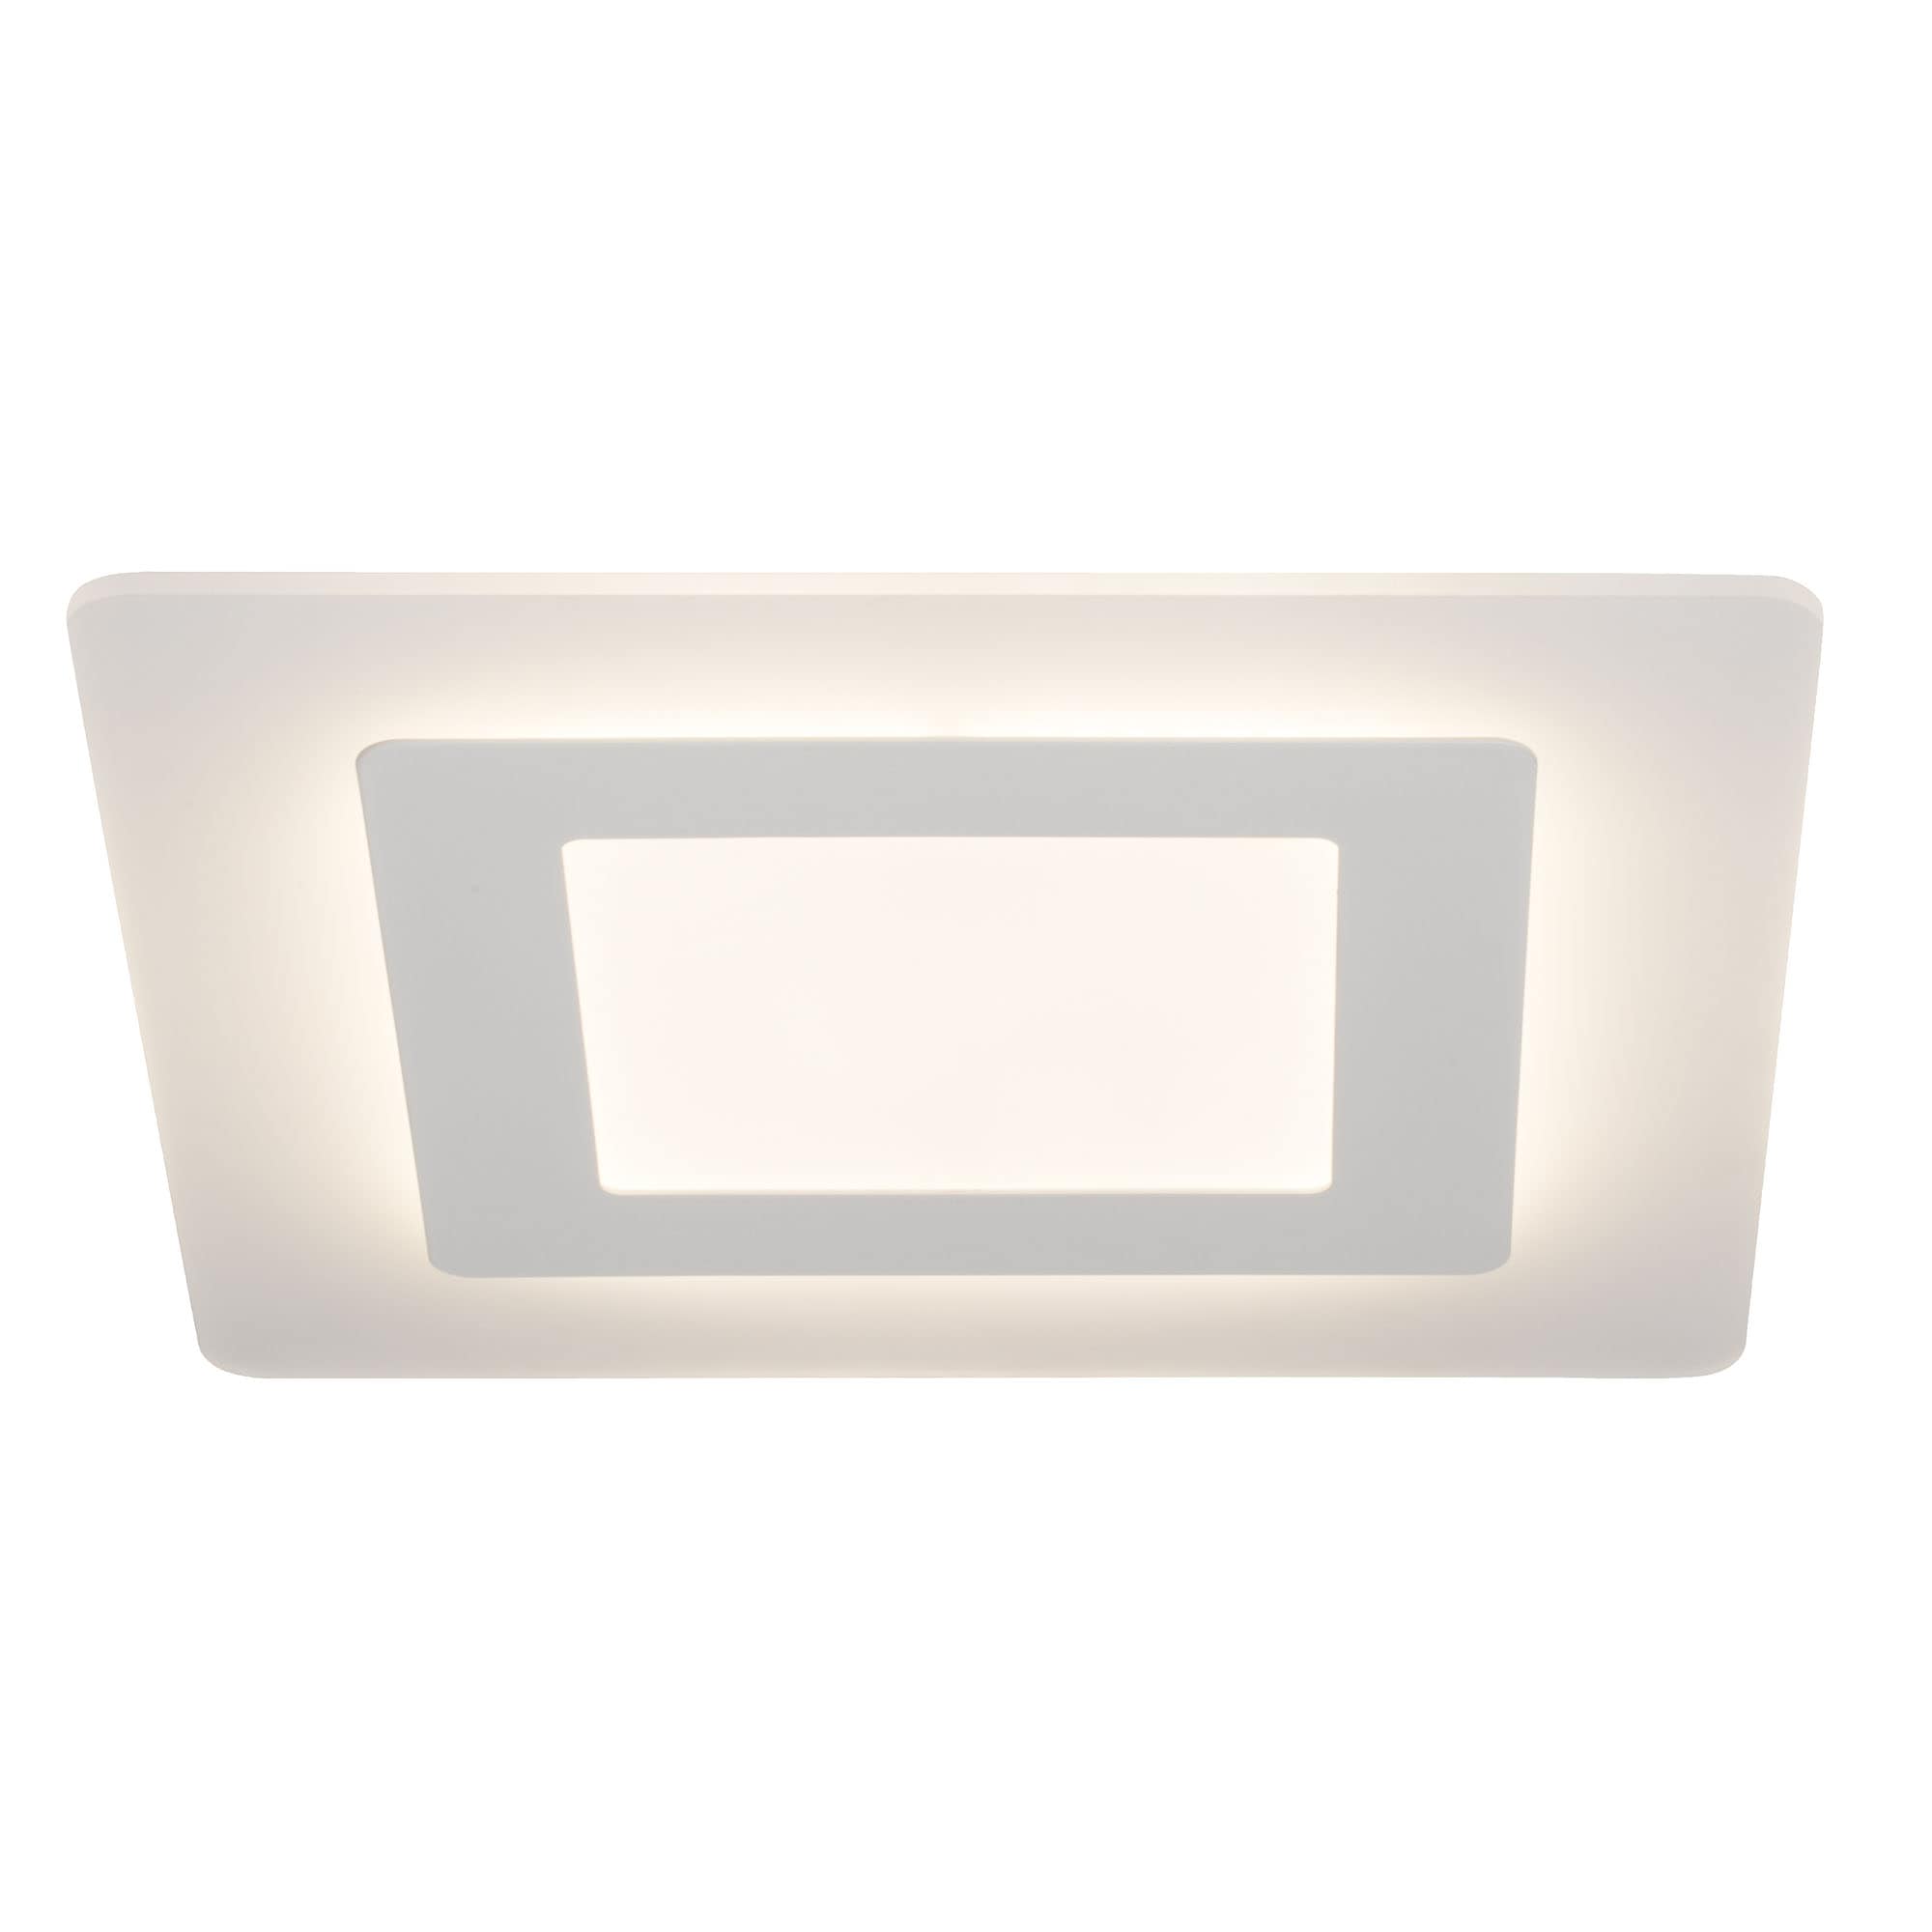 AEG LED Deckenleuchte »Xenos«, 1 flammig-flammig, 35 x 35 cm, 3300 lm,  warmweiß, Aluminium/Acryl, weiß online bestellen